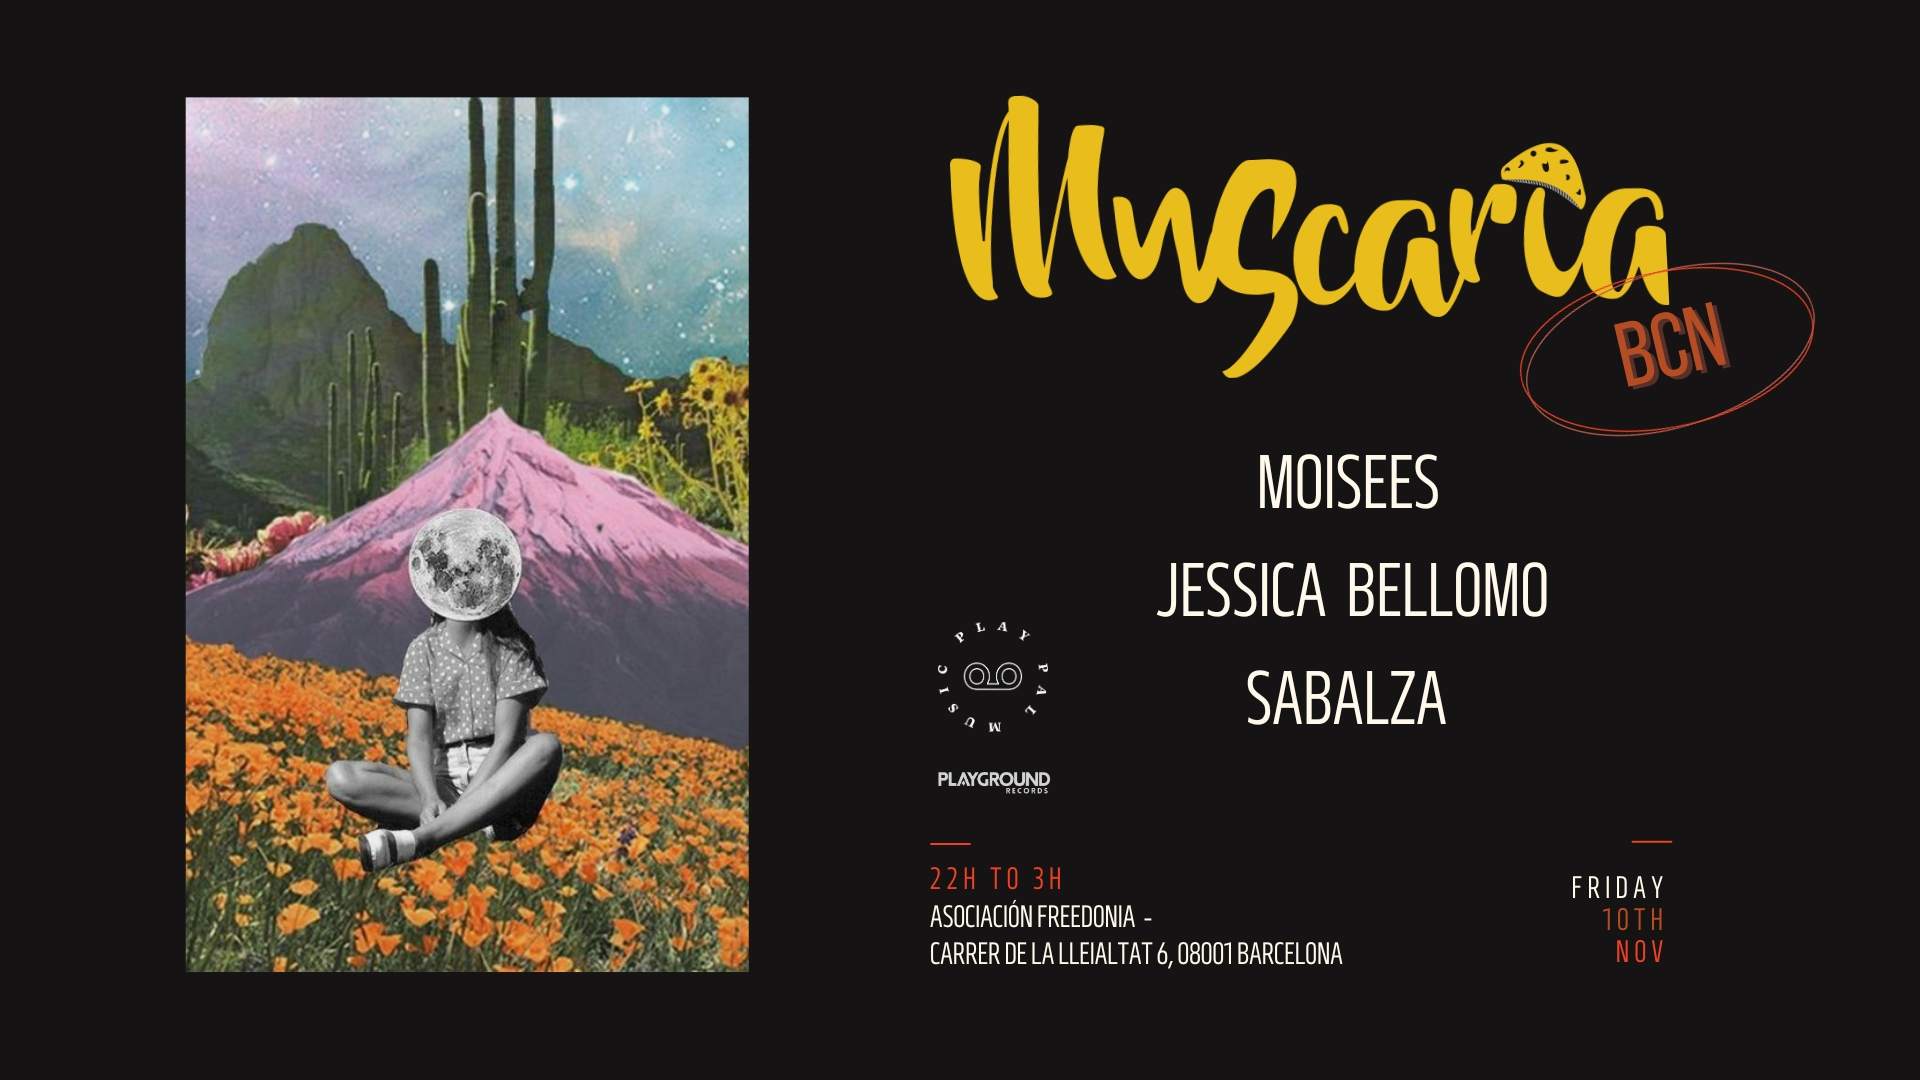 Muscaria #013 with Moisees + Jessica Bellomo + SABALZA - フライヤー表